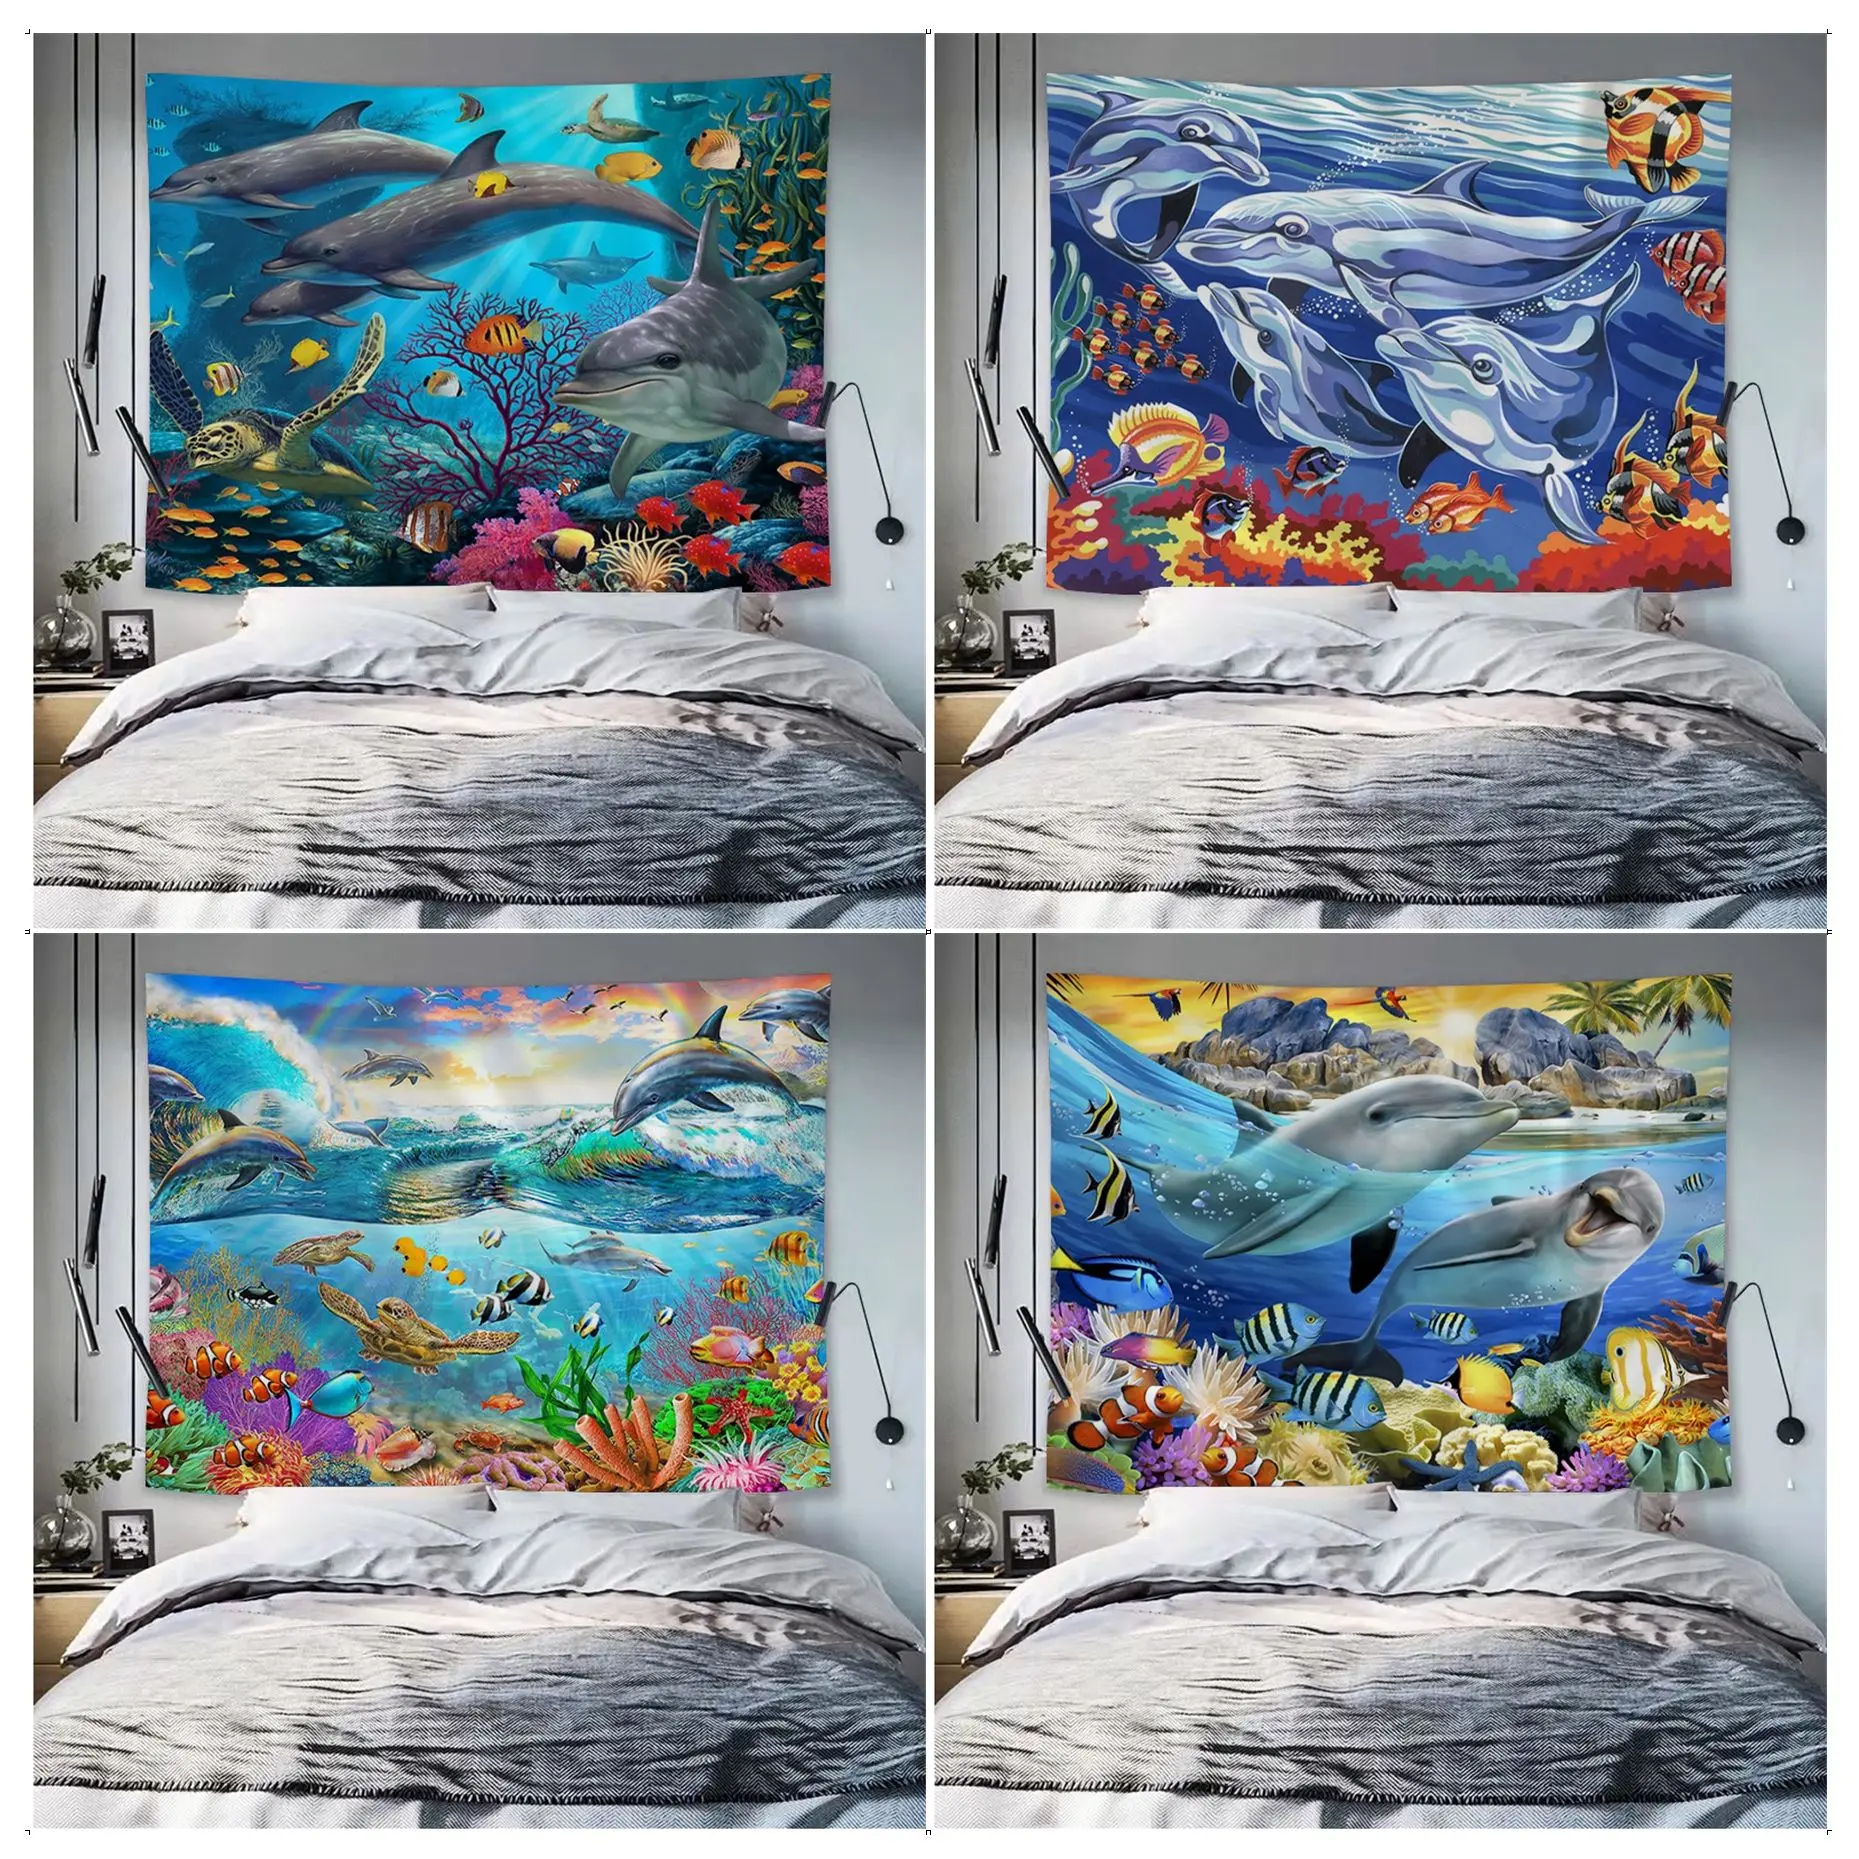 

dream scene underwater world Chart Tapestry Bohemian Wall Tapestries Mandala Wall Hanging Home Decor